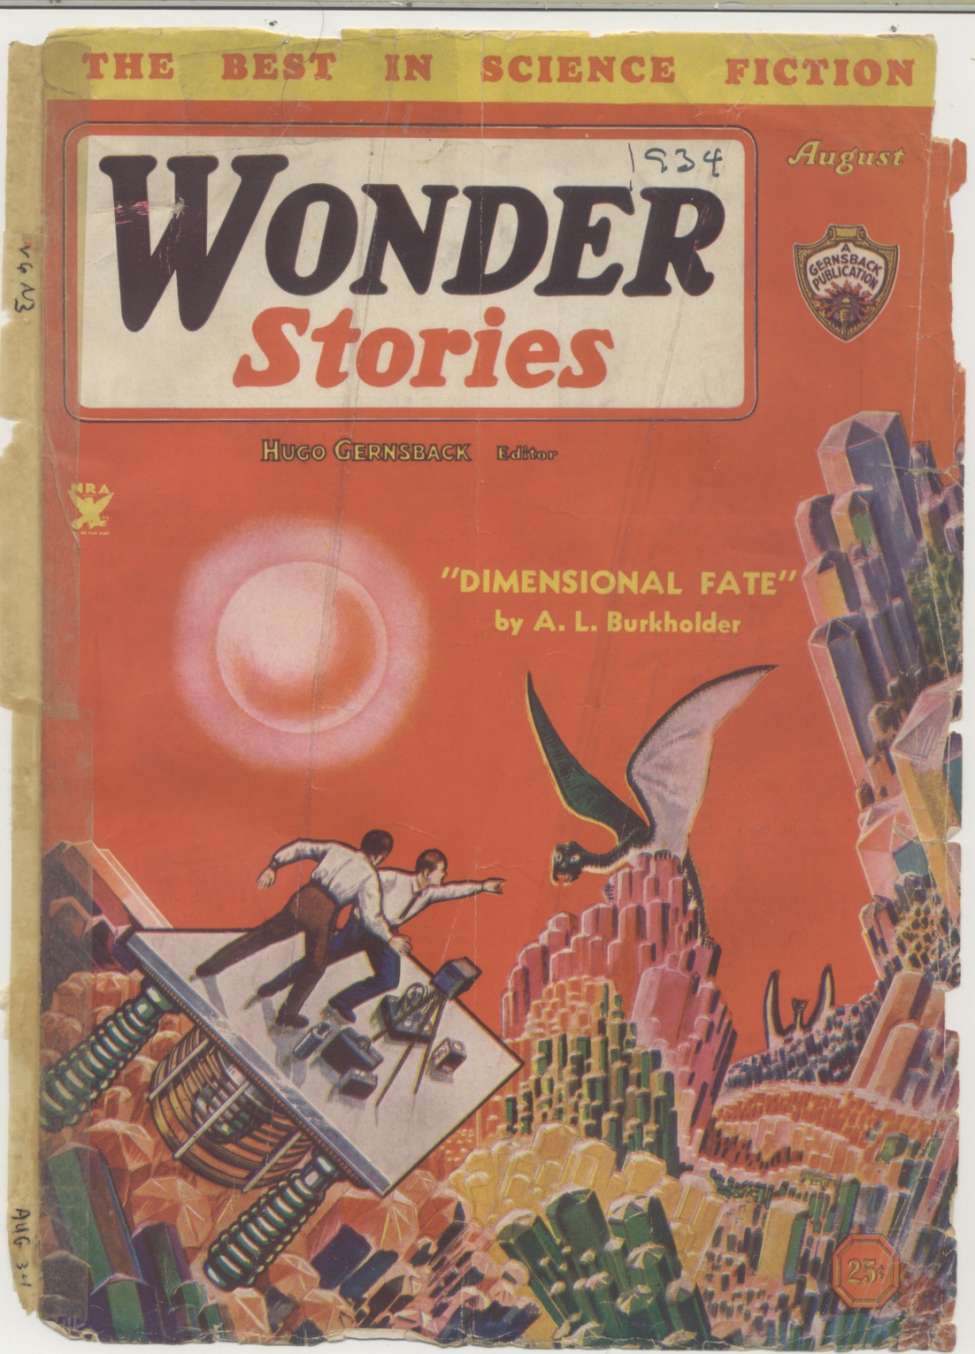 Comic Book Cover For Wonder Stories v6 3 - Dimensional Fate - A. L. Burkholder